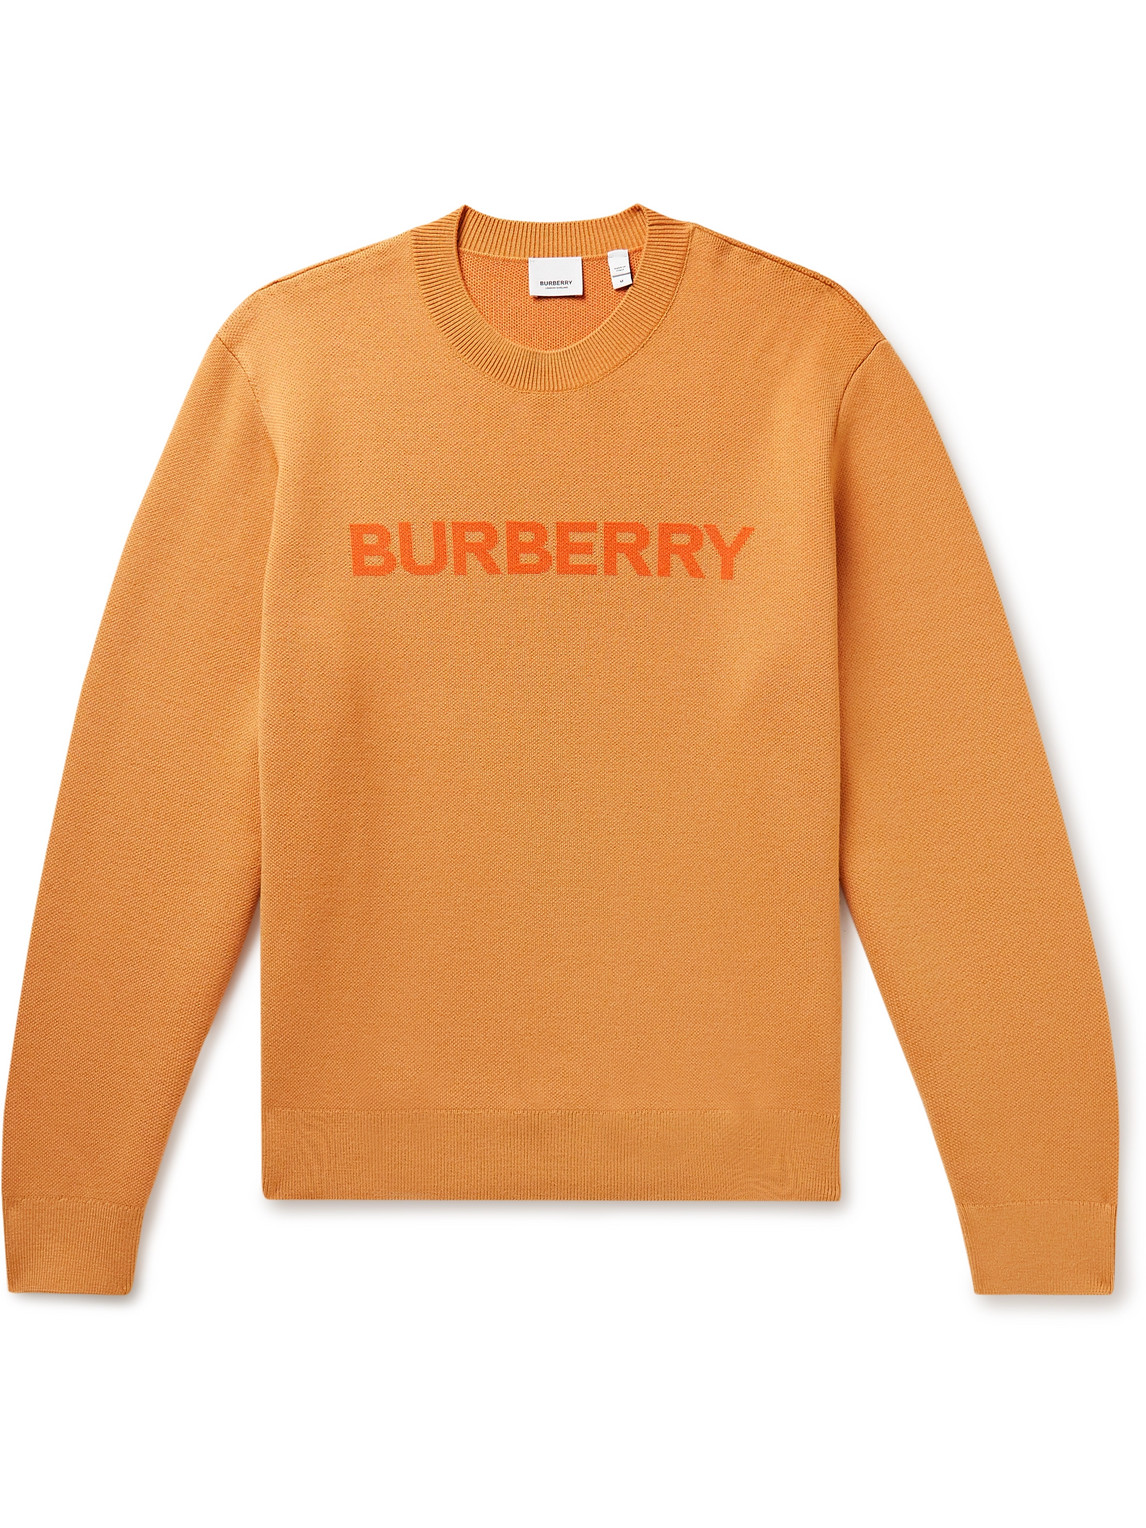 Burberry Logo Intarsia Wool Cotton Sweater In Dusty Orange